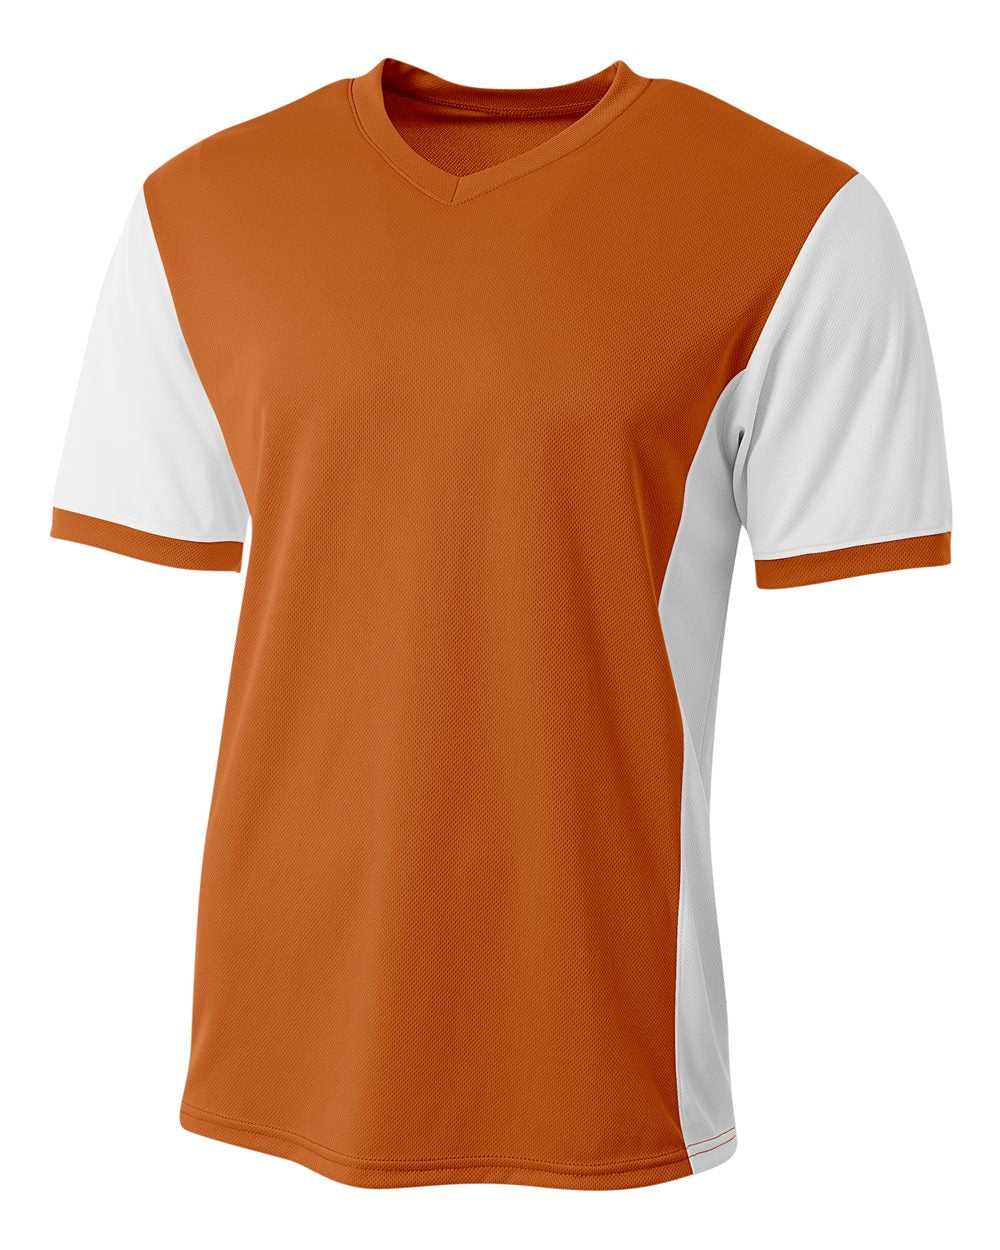 A4 N3017 Premier Soccer Jersey - Orange White - HIT a Double